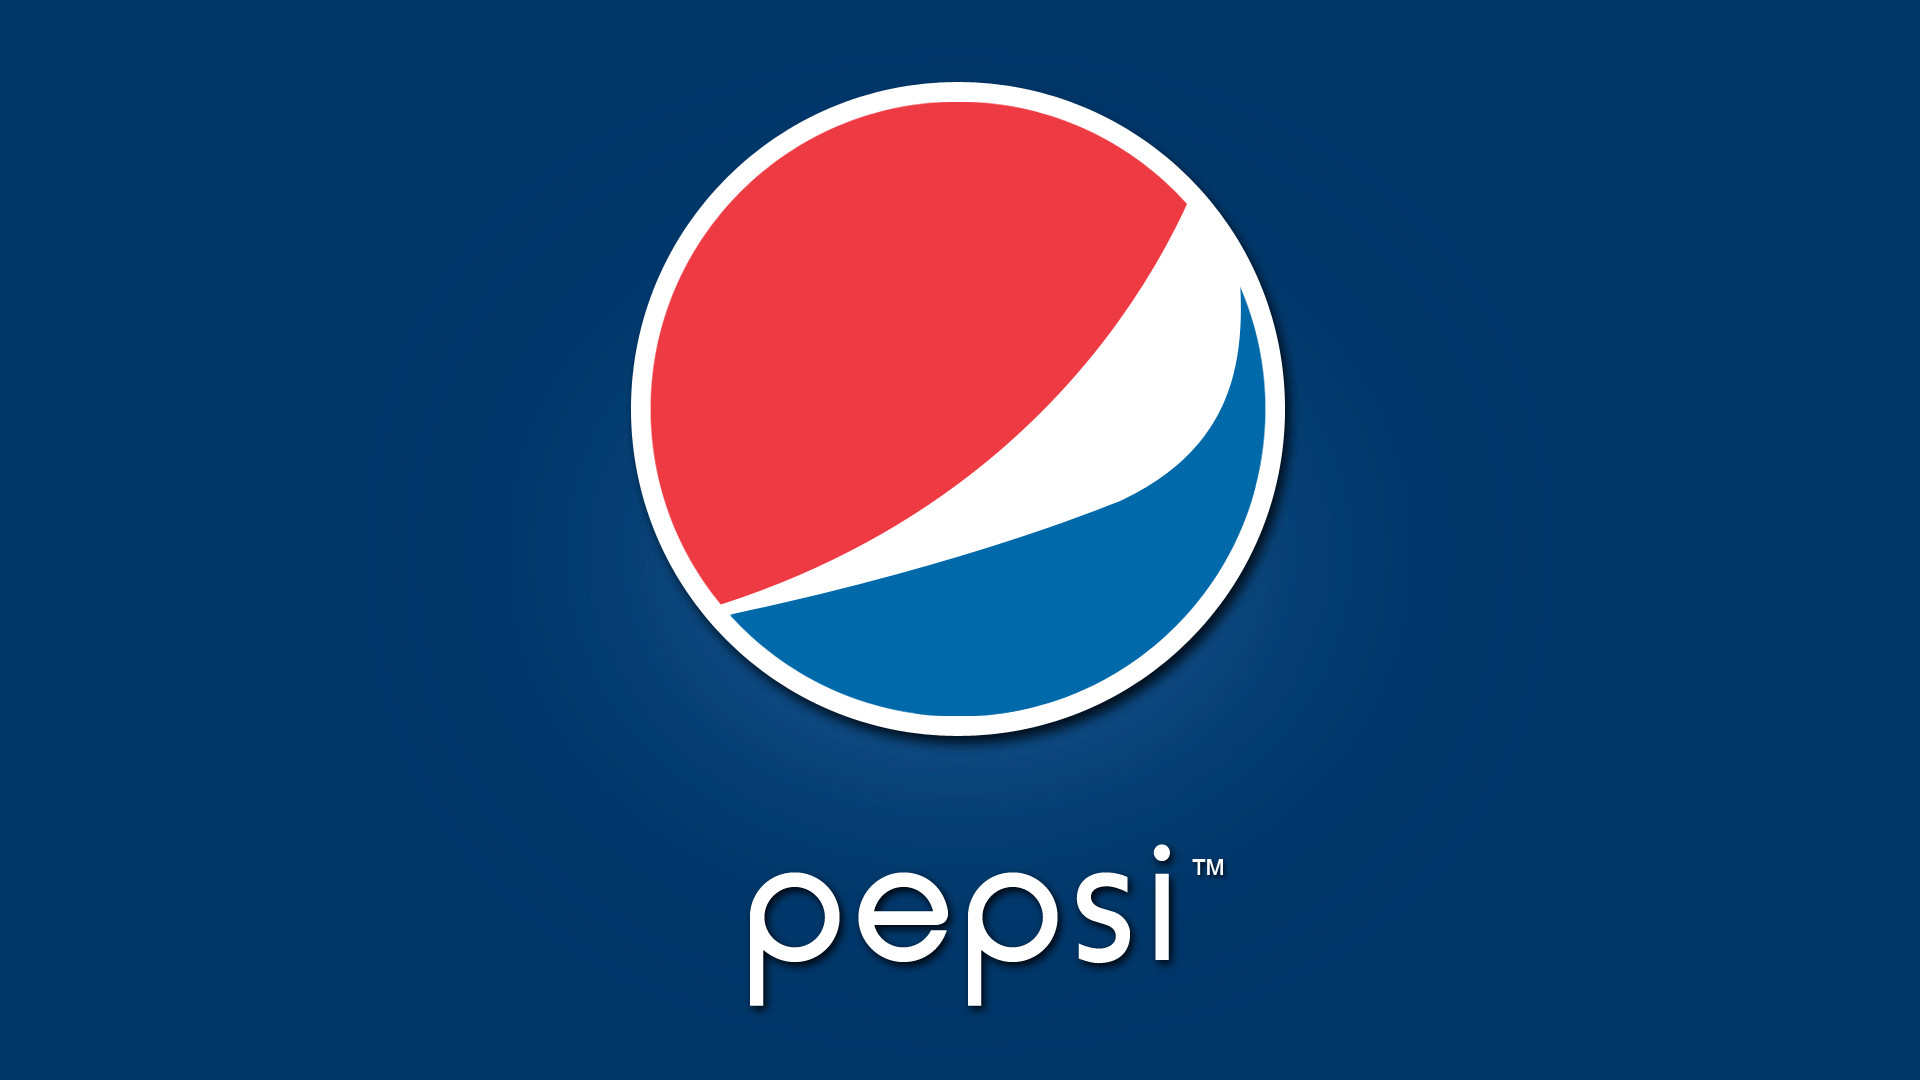 1920x1080 Pepsi Logo Wallpaper Free Download Brand Logo Pepsi Wallpaper .